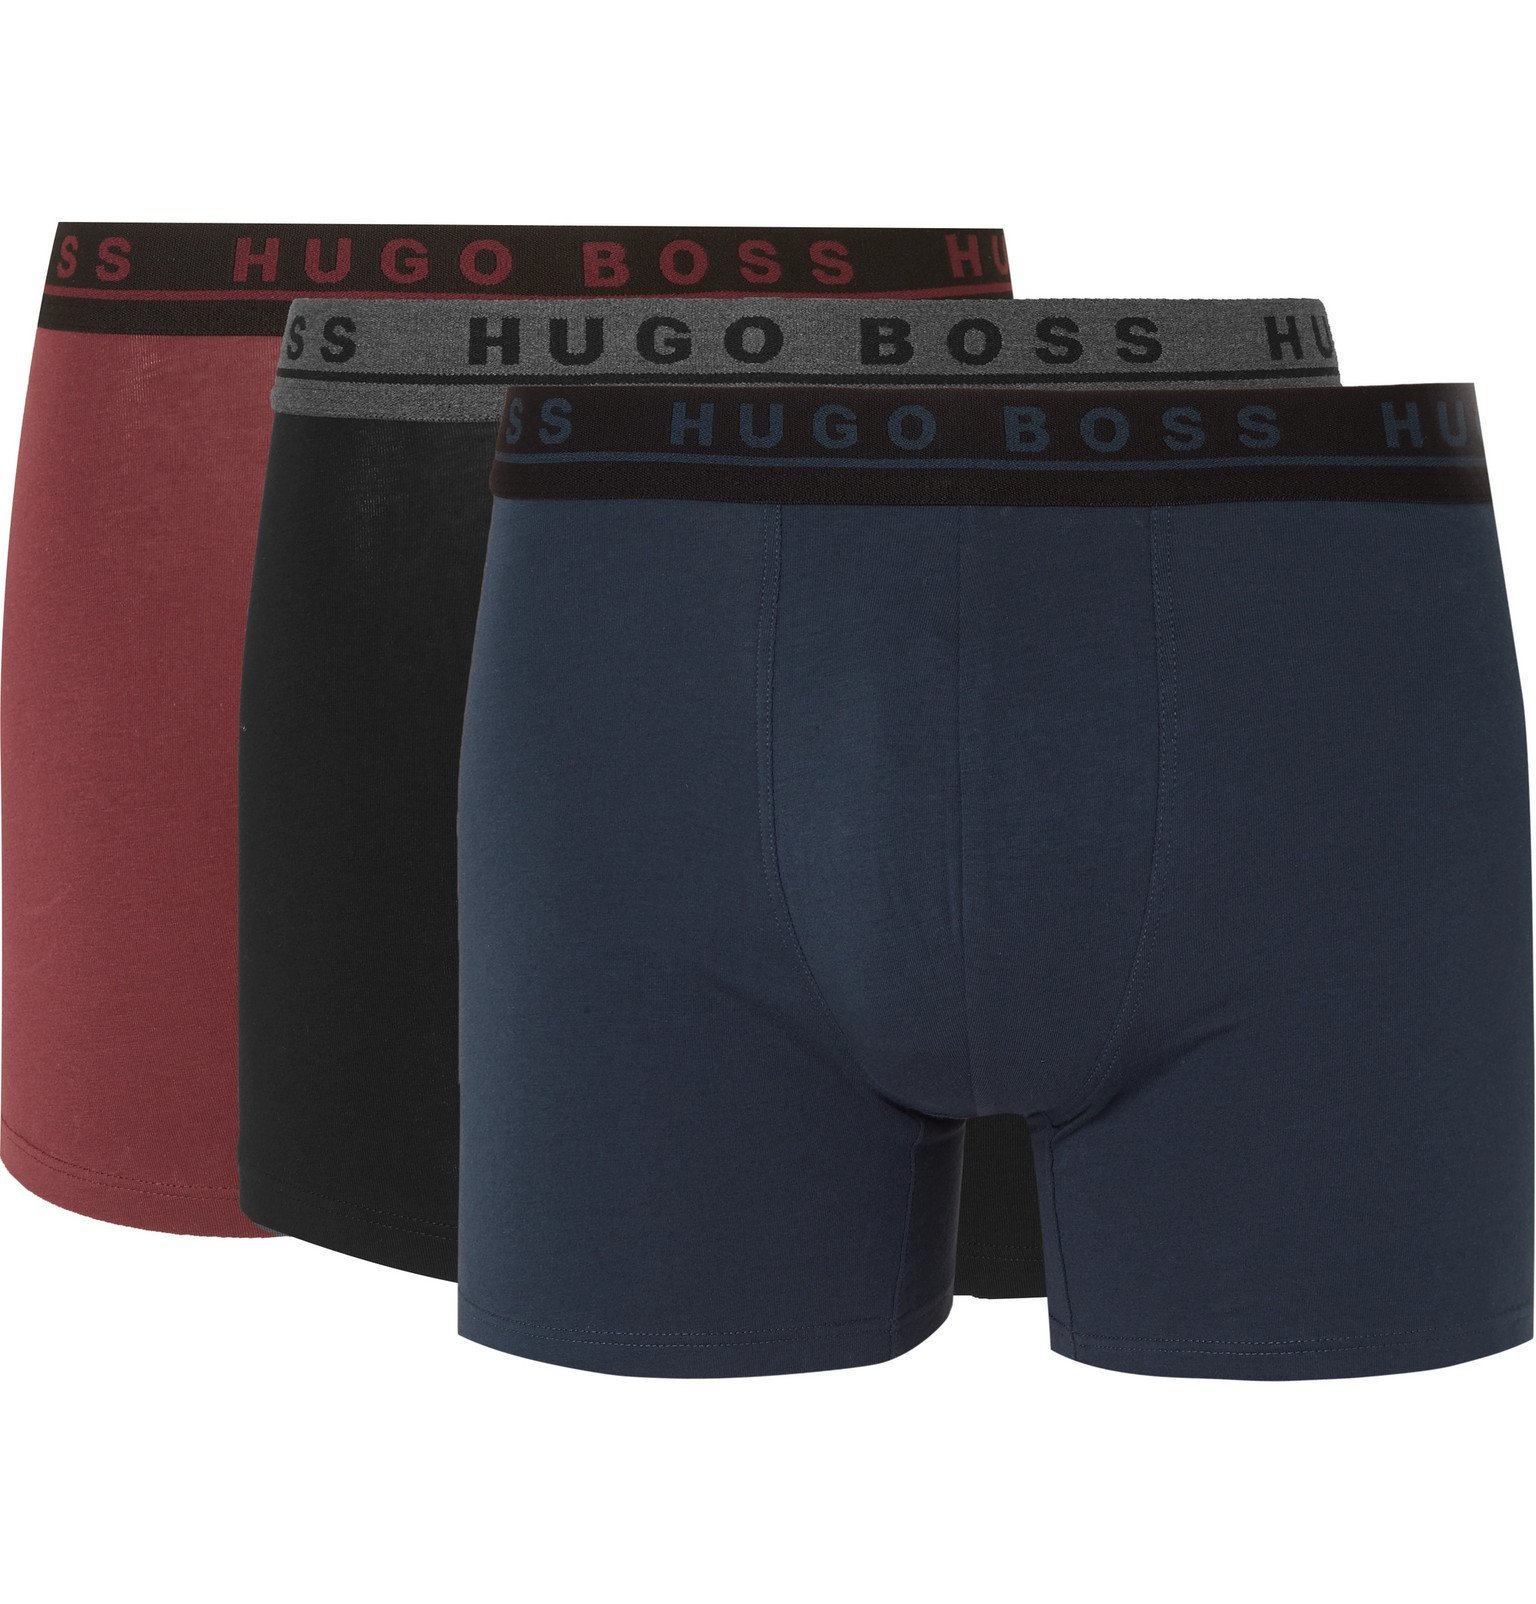 hugo boss cotton boxers